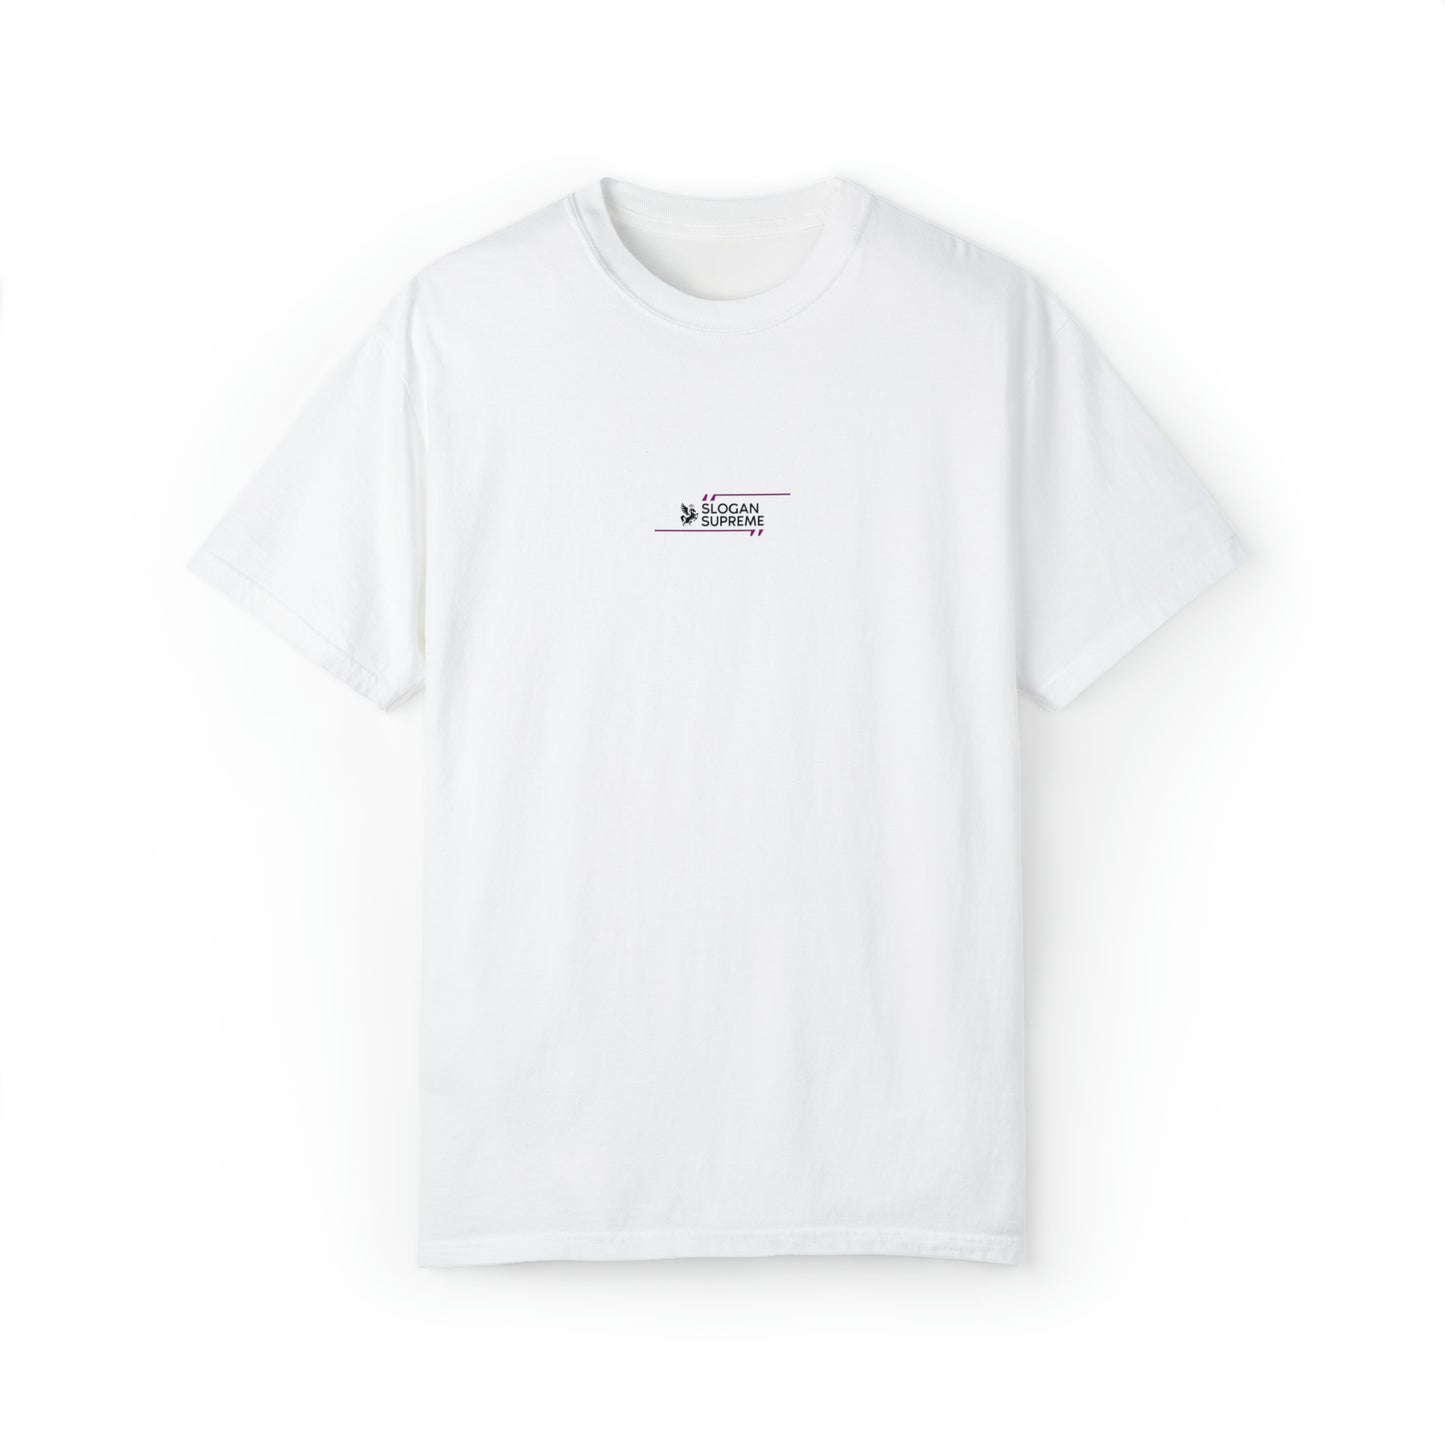 Vibing Unisex T-shirt